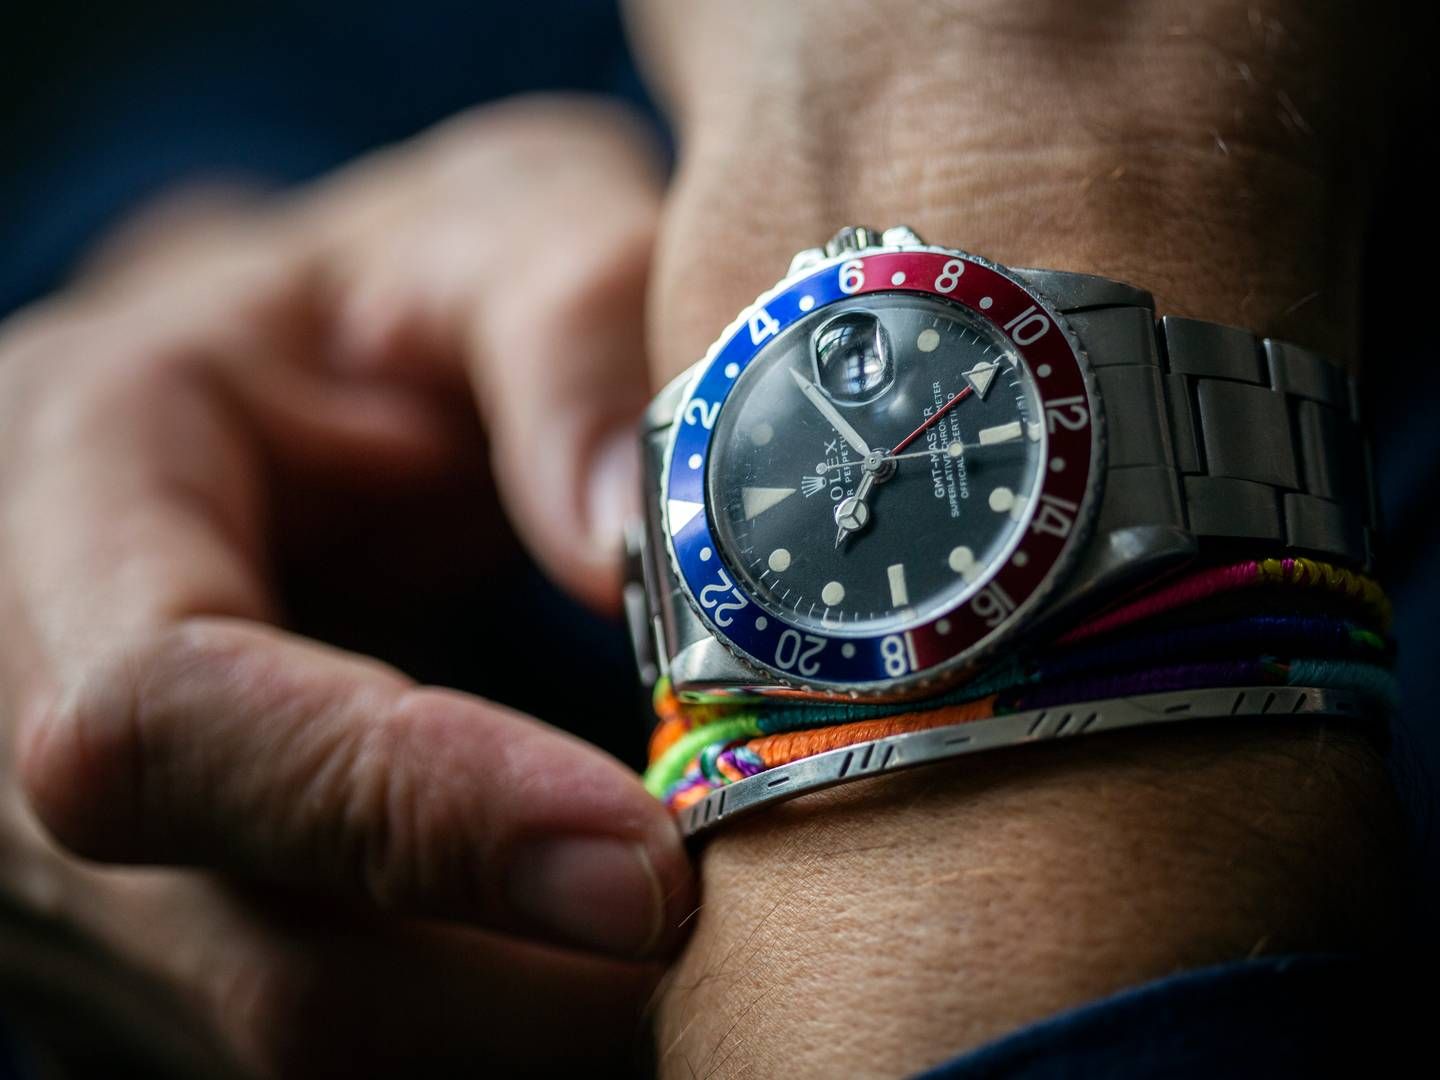 Sveitsiske Rolex-klokker er populære investerings- og samleobjekter. | Foto: Jens Hartmann